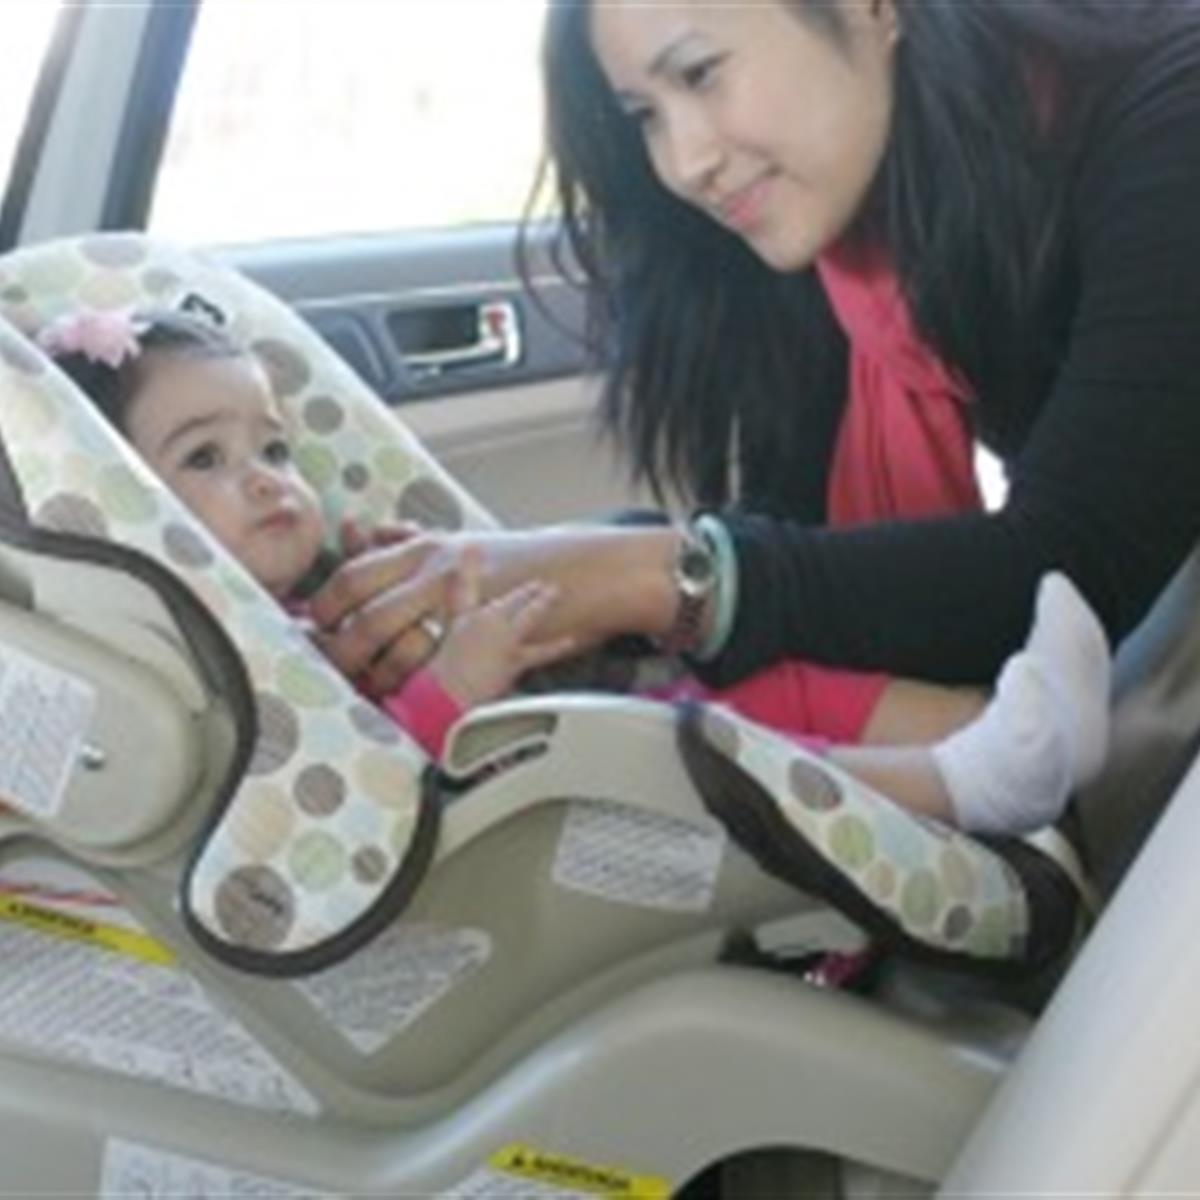 Evolution of Child Car Seats in America